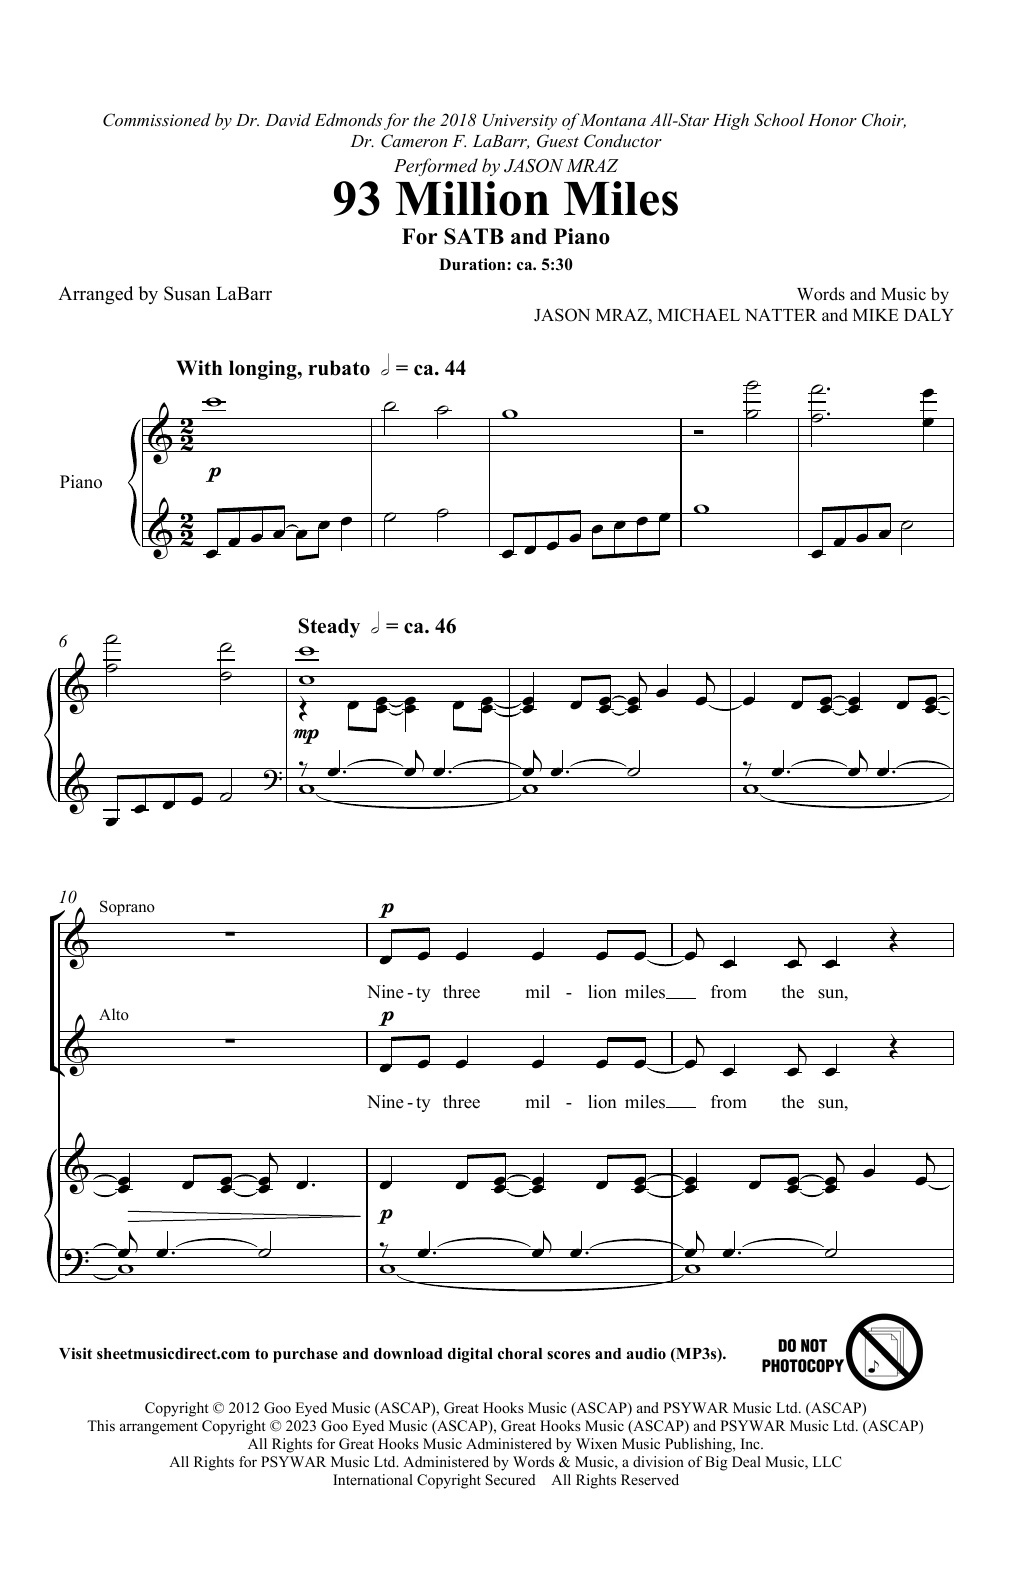 Jason Mraz 93 Million Miles (arr. Susan LaBarr) Sheet Music Notes & Chords for SATB Choir - Download or Print PDF